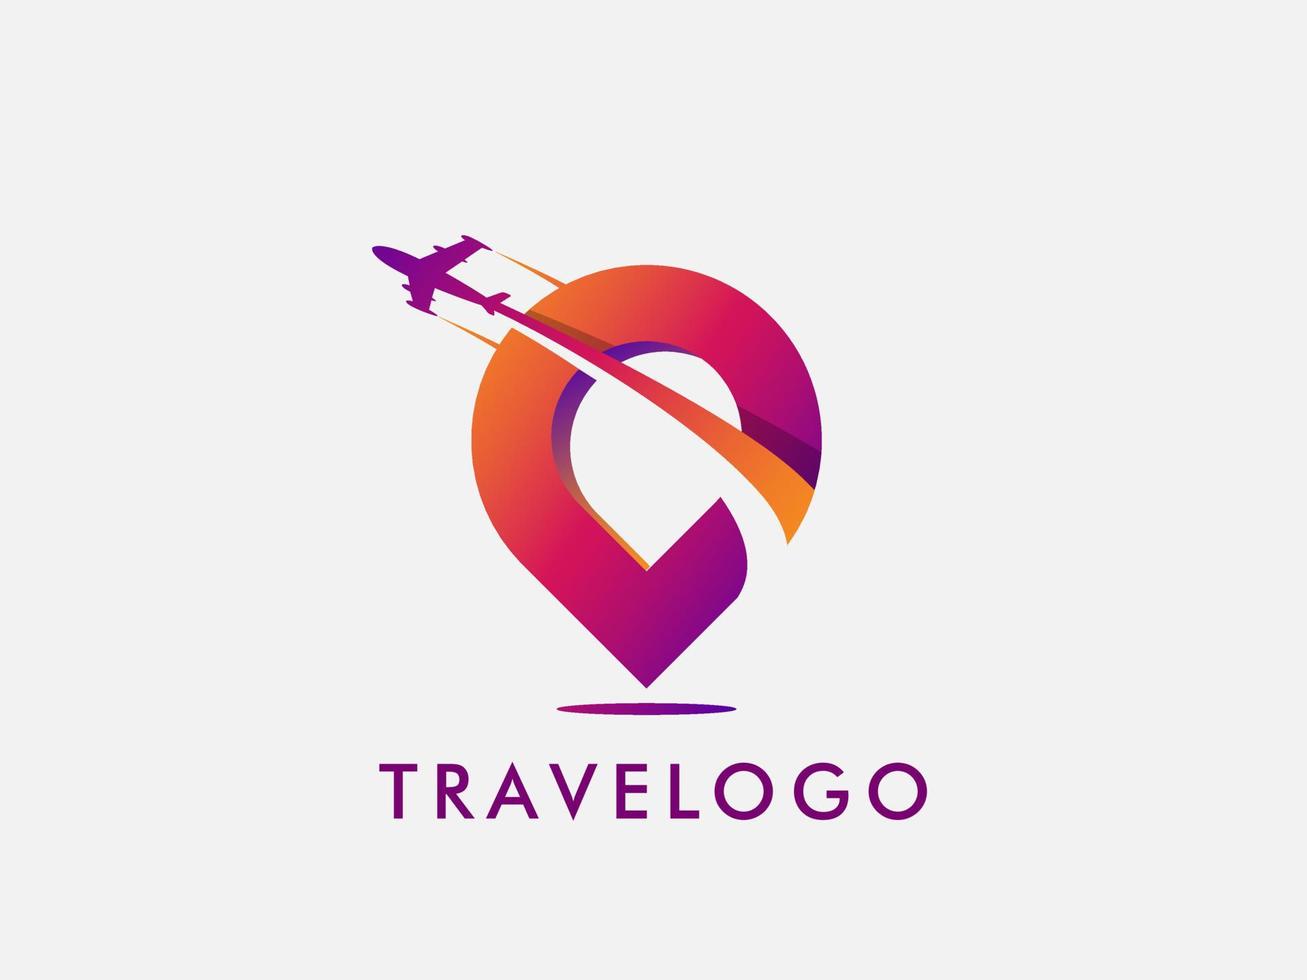 Travel logo design vector illustration